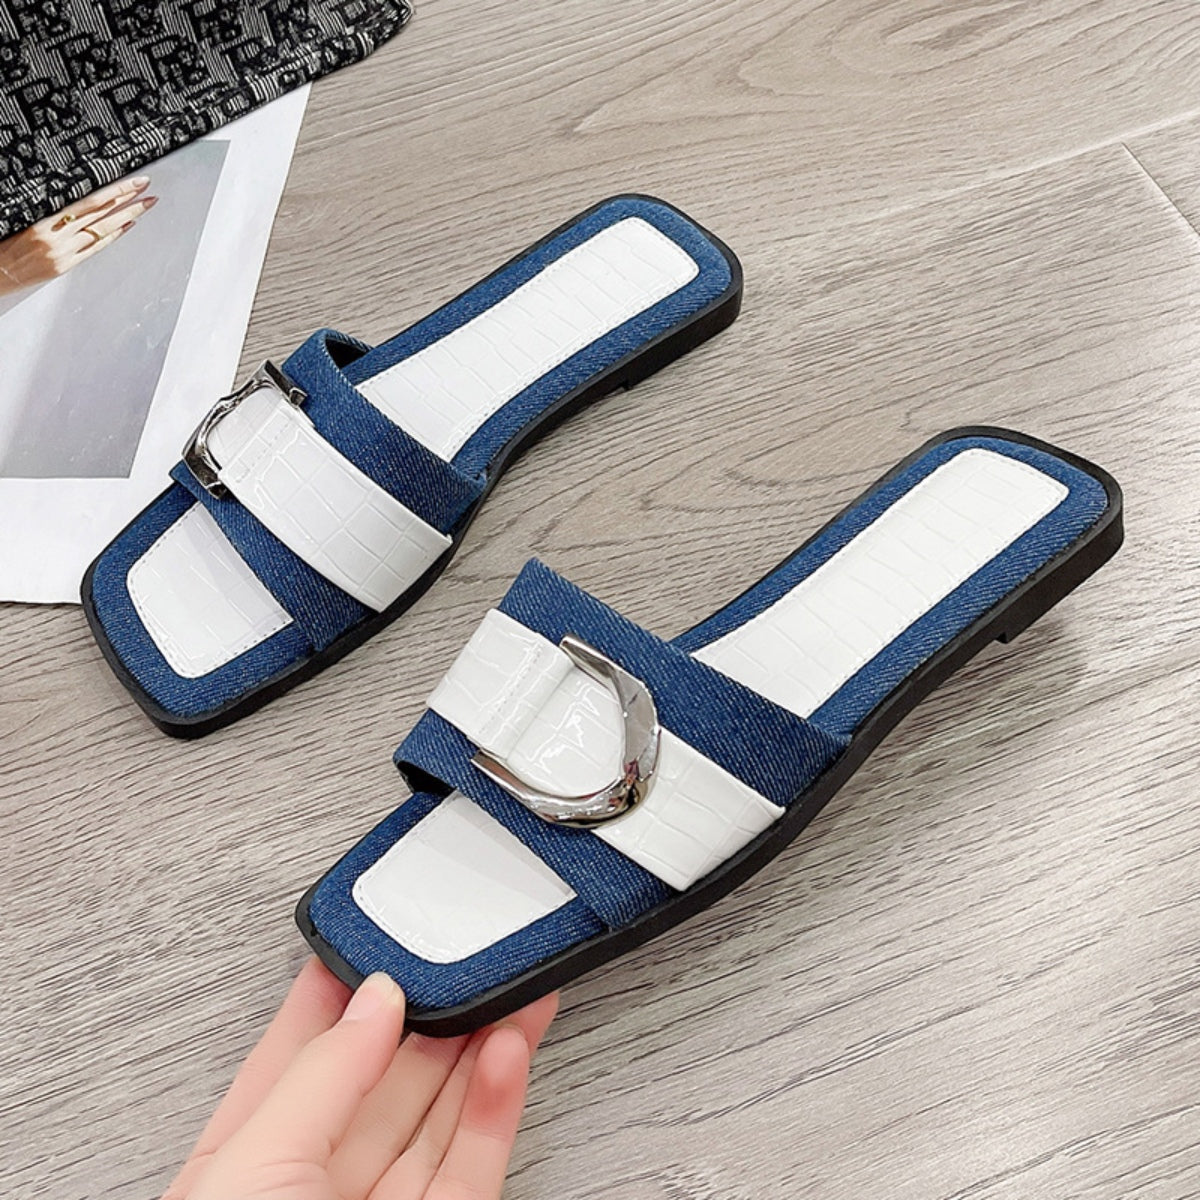 TEEK - Buckle Trim Open Toe Sandals SHOES TEEK Trend White 4 